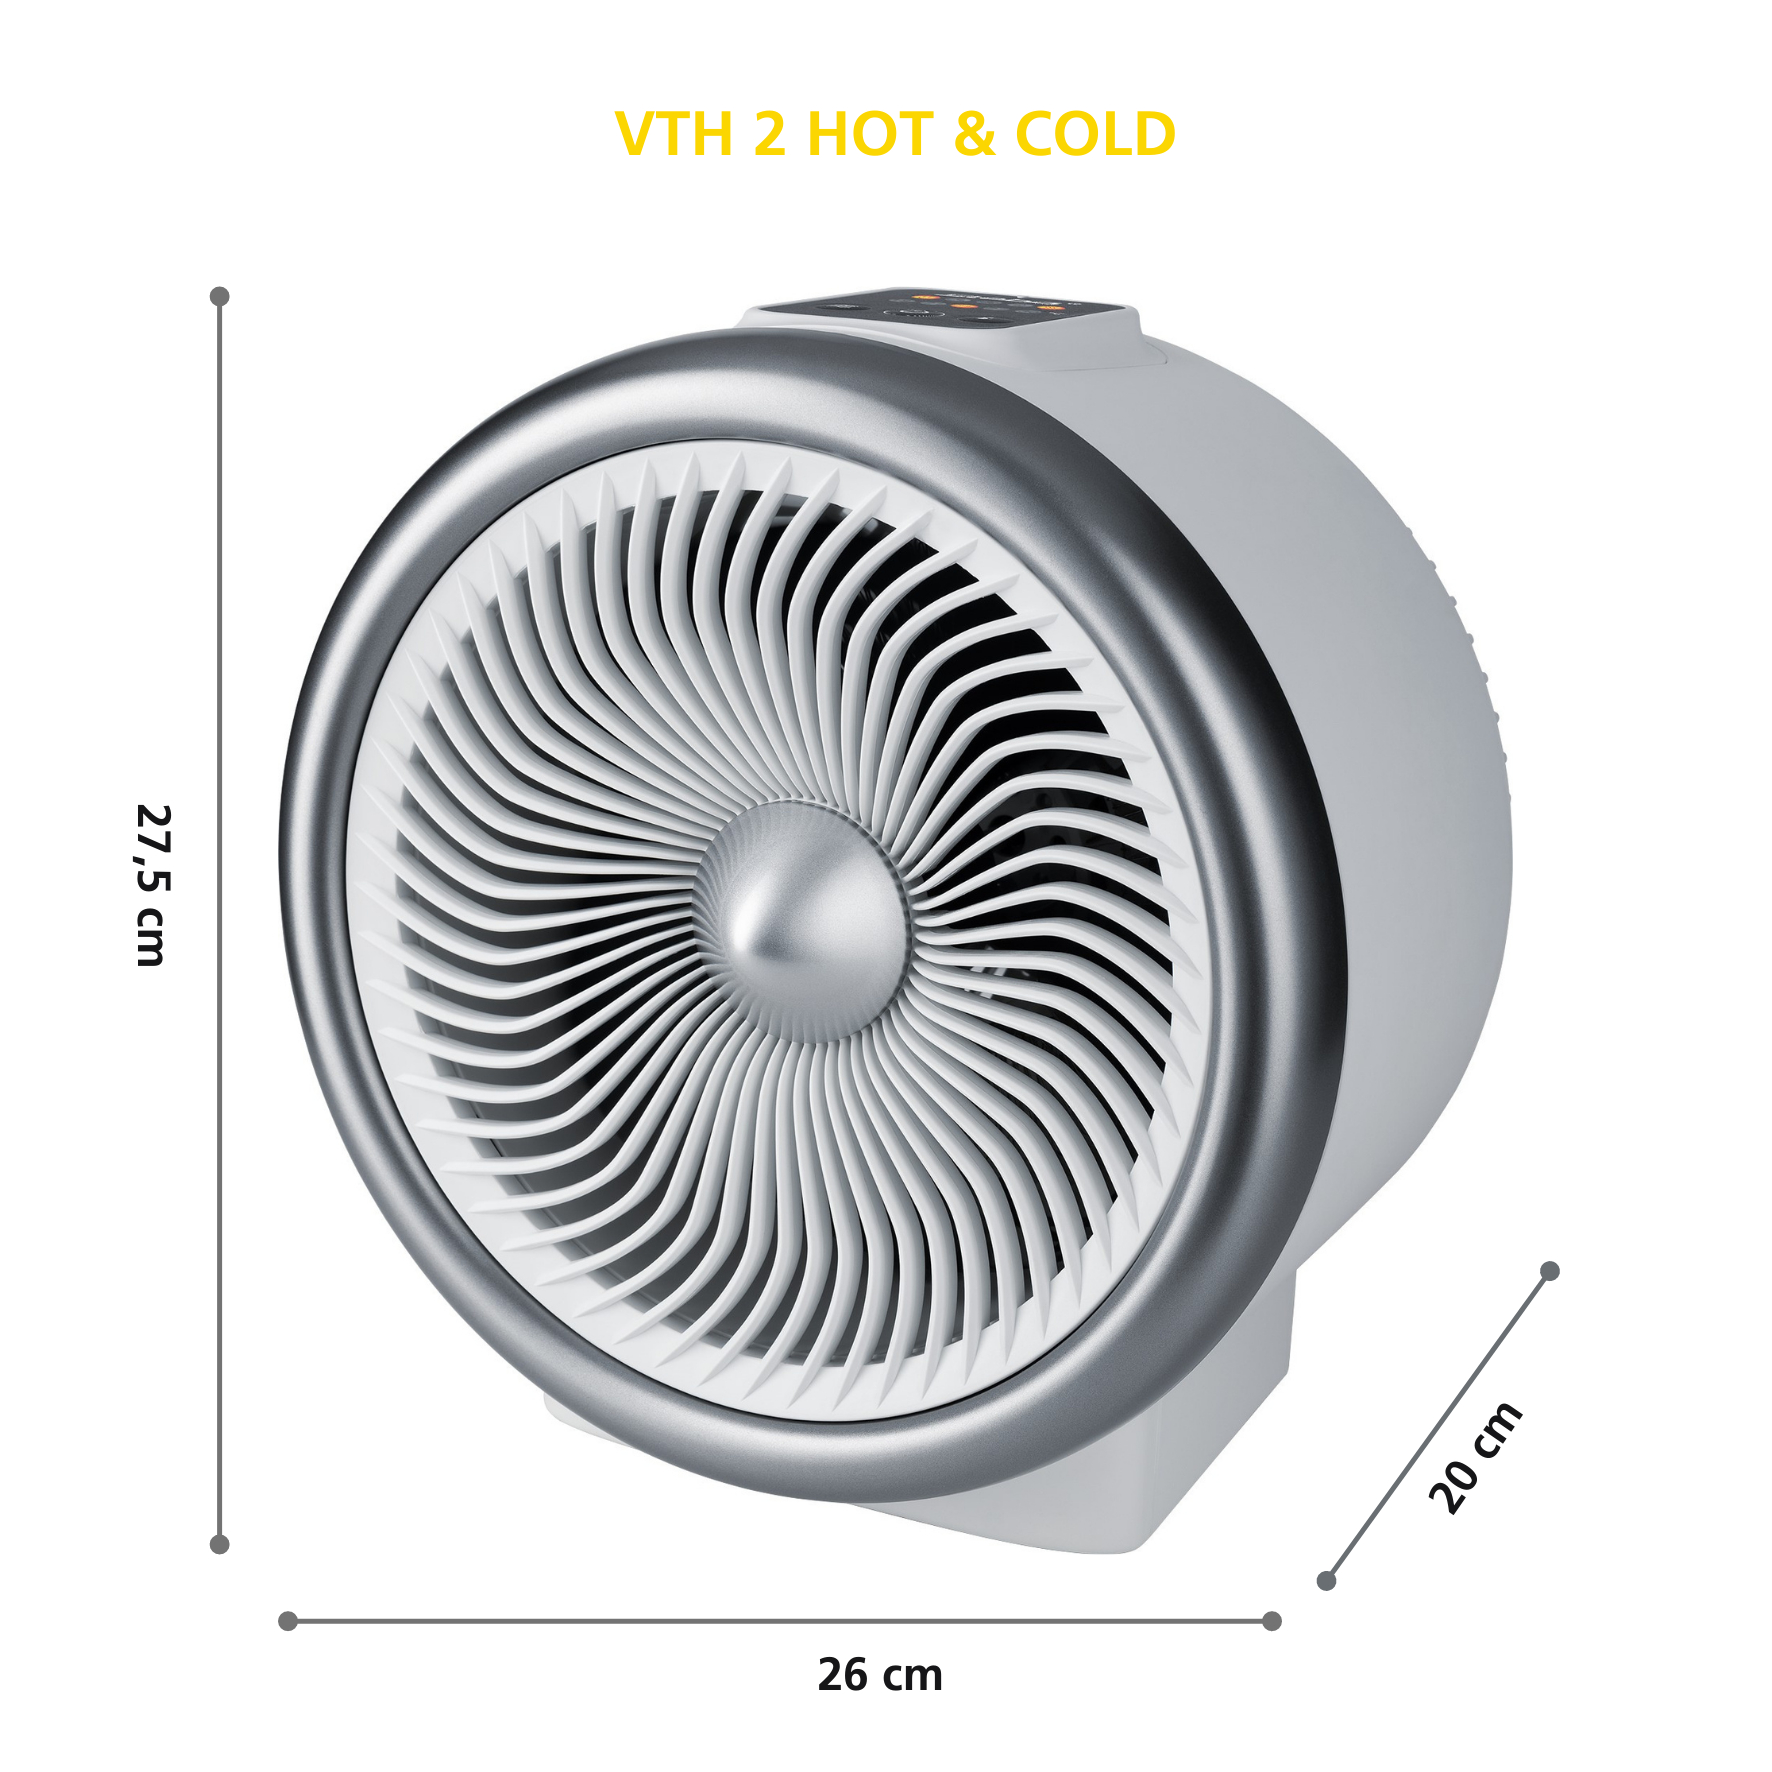 Watt) 2 Weiß/Silber (2000 STEBA Cold Ventilator/Heizlüfter VTH & Hot